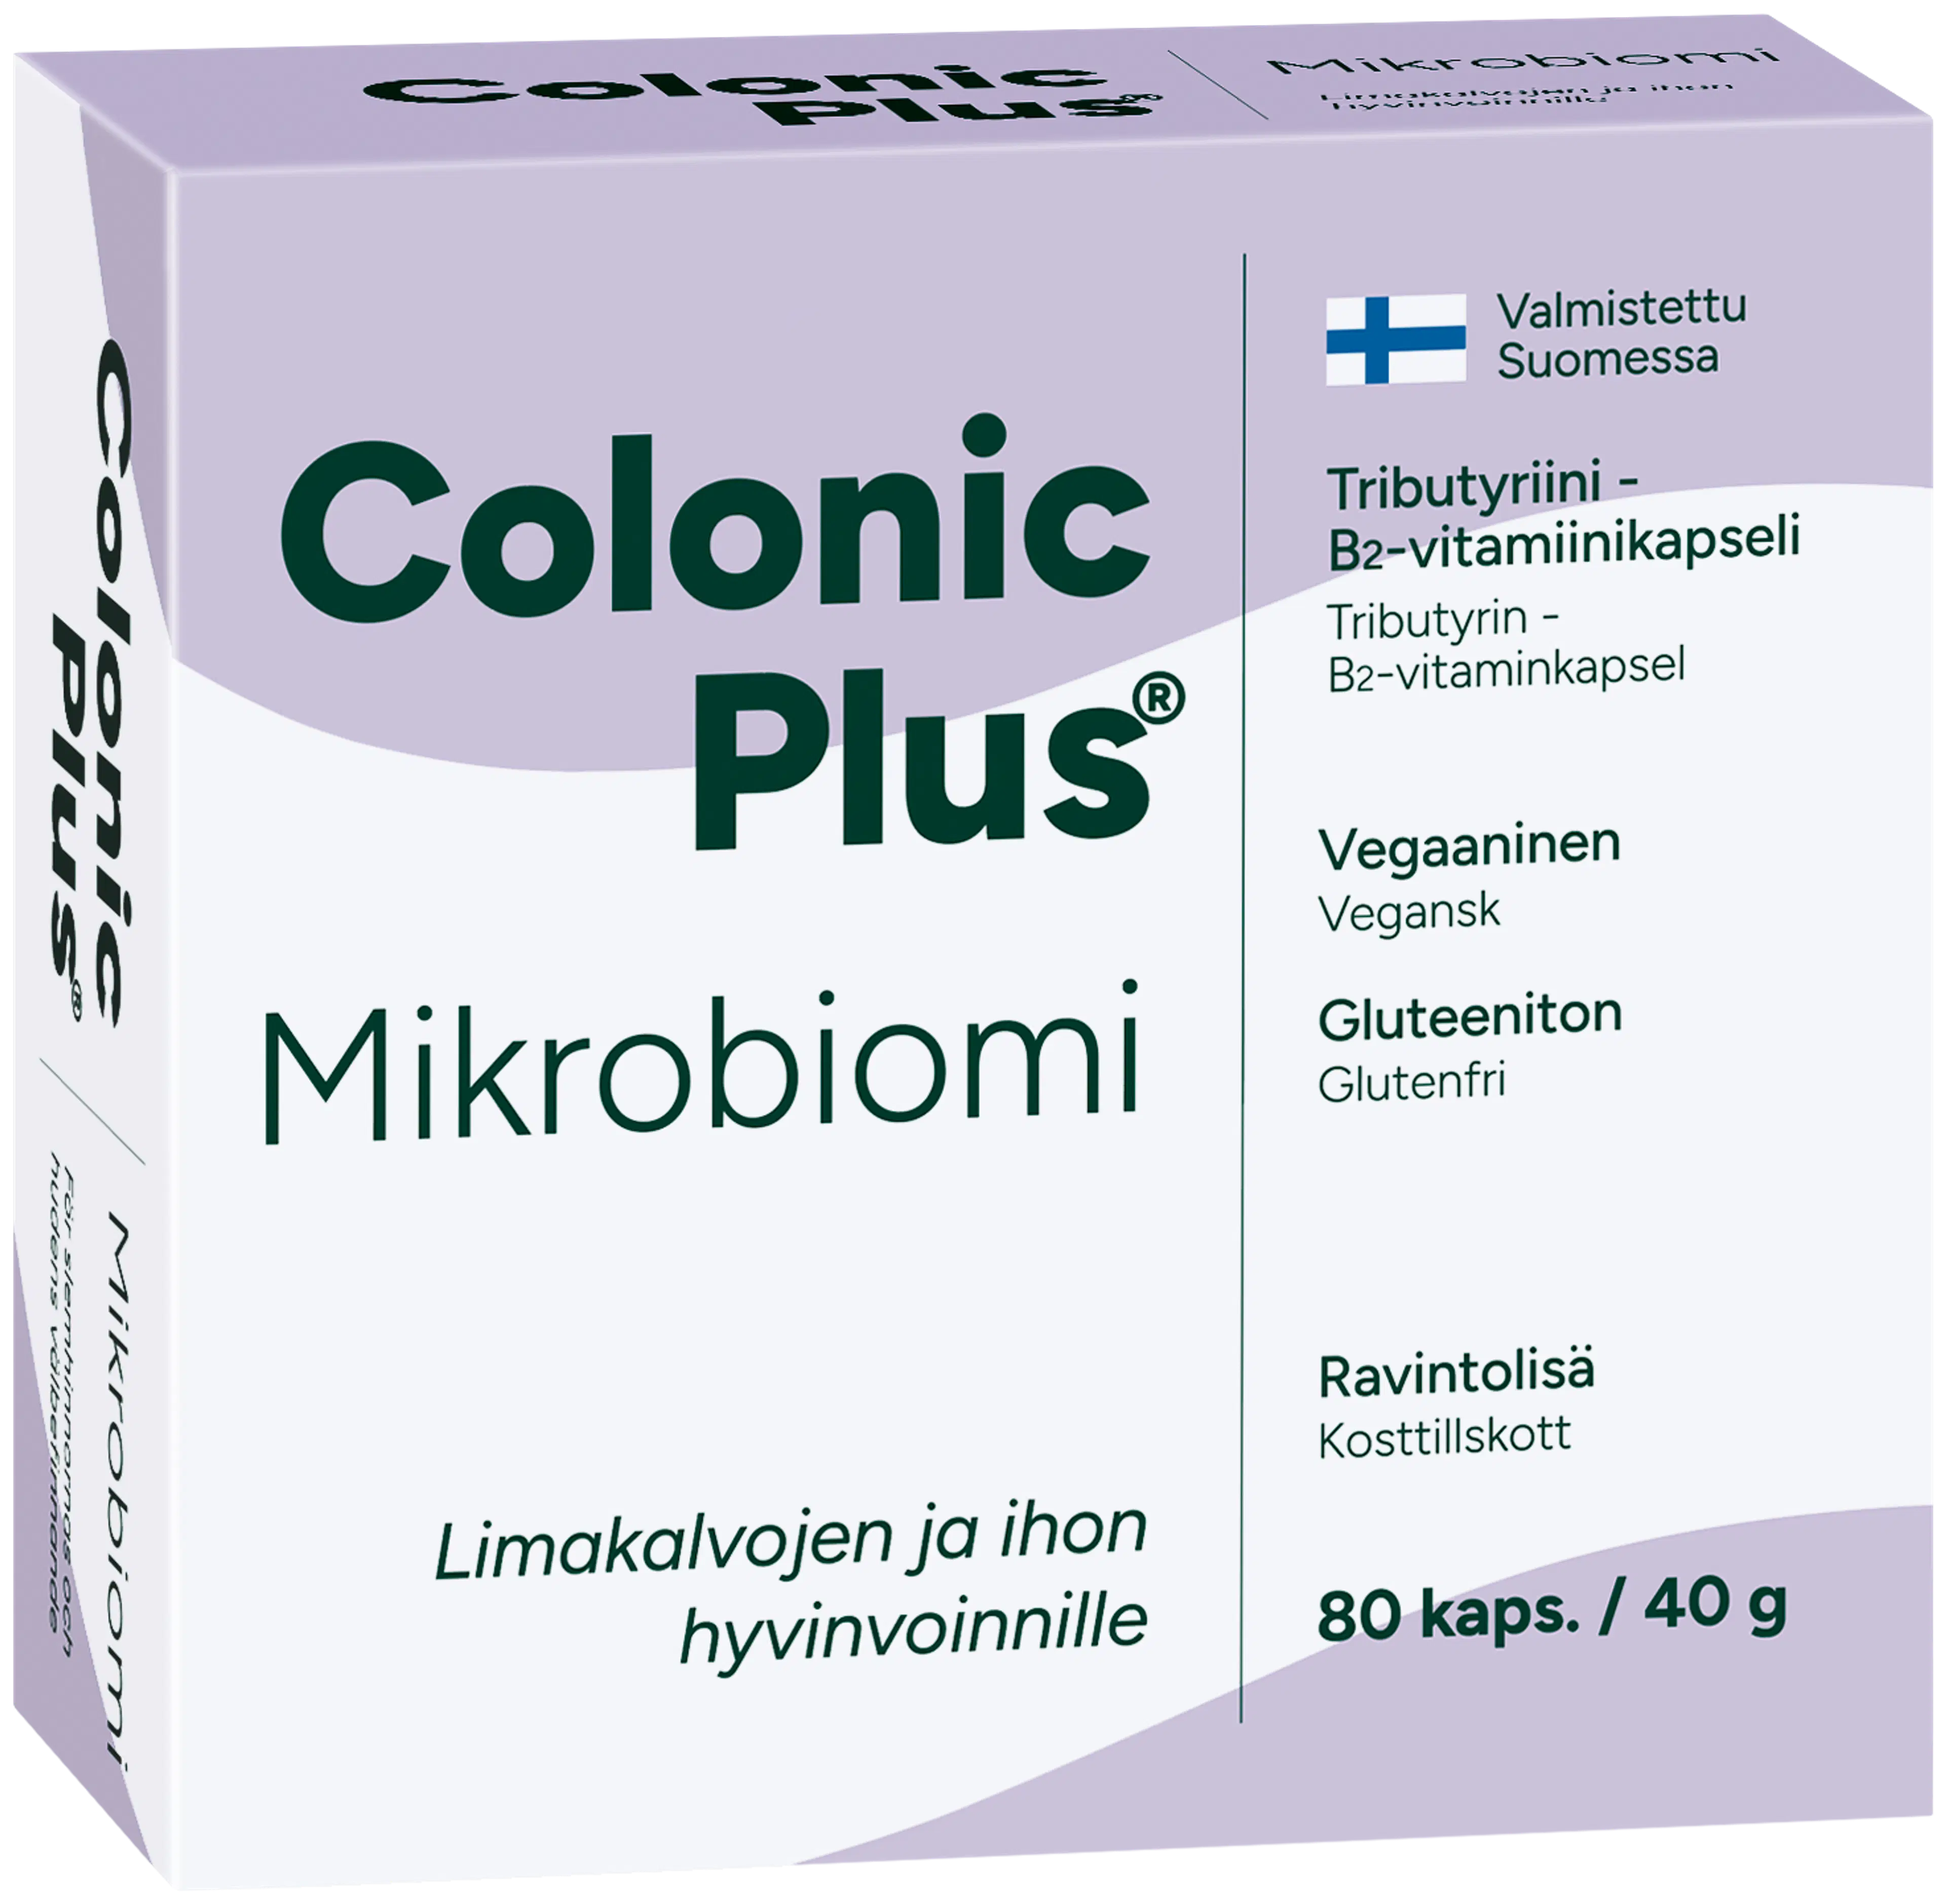 Colonic Plus Mikrobiomi Tributyriini - B2-vitamiinikapseli 80 kaps